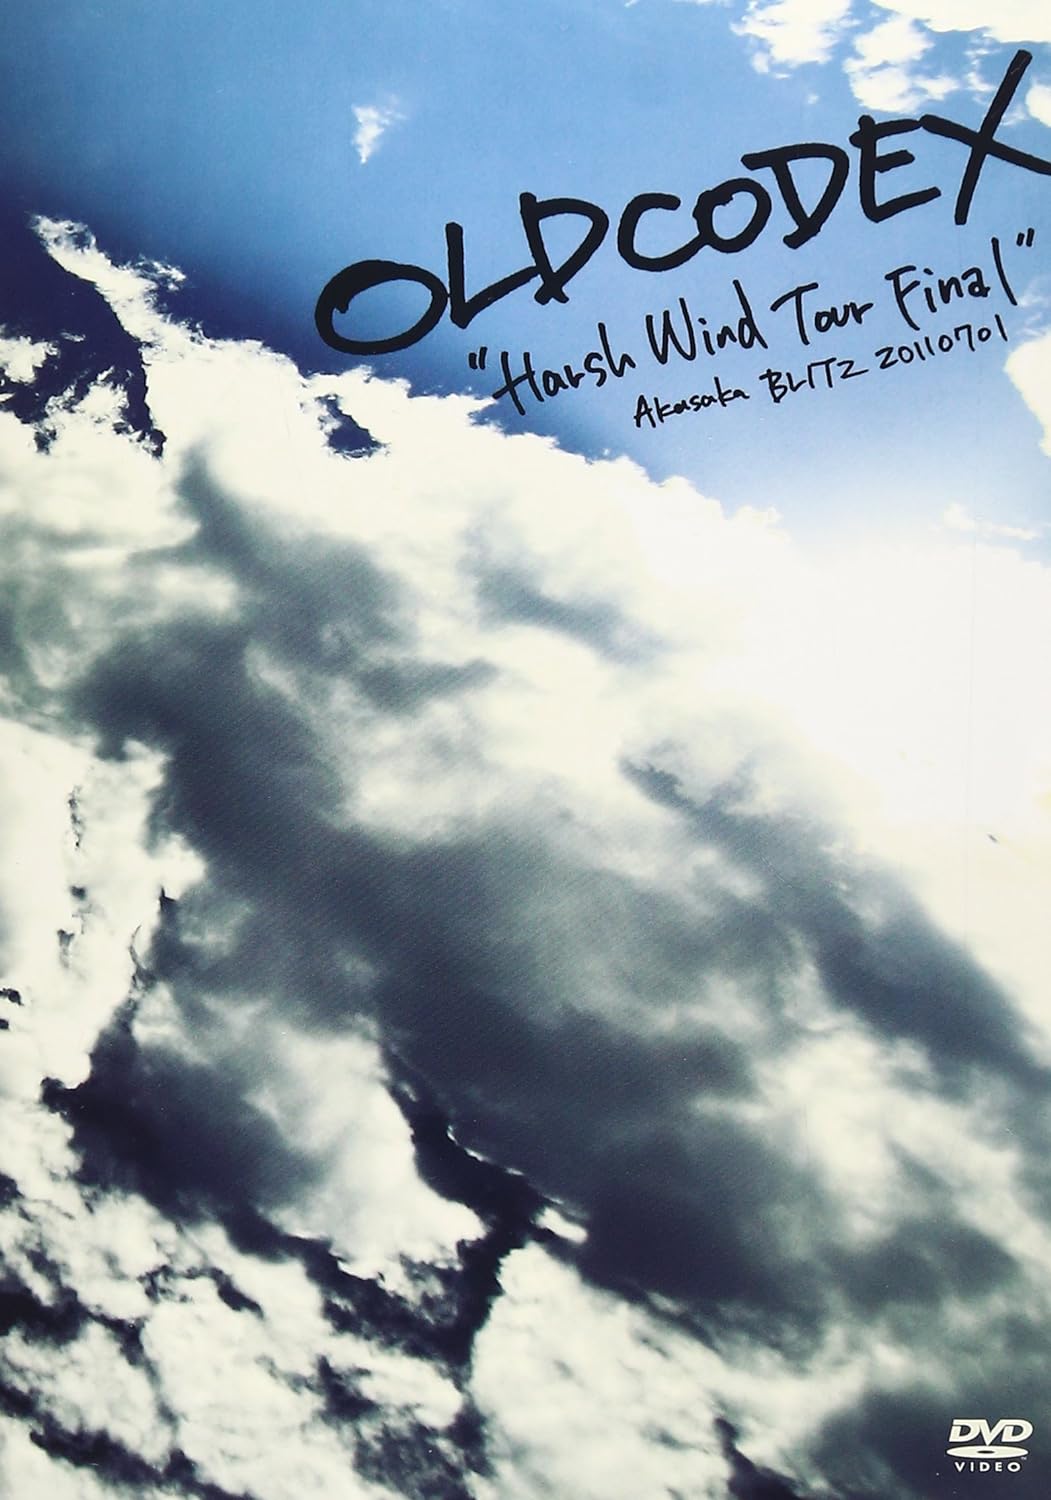 OLDCODEX Live DVD gHarsh Wind Tour Finalh 2011.7.1